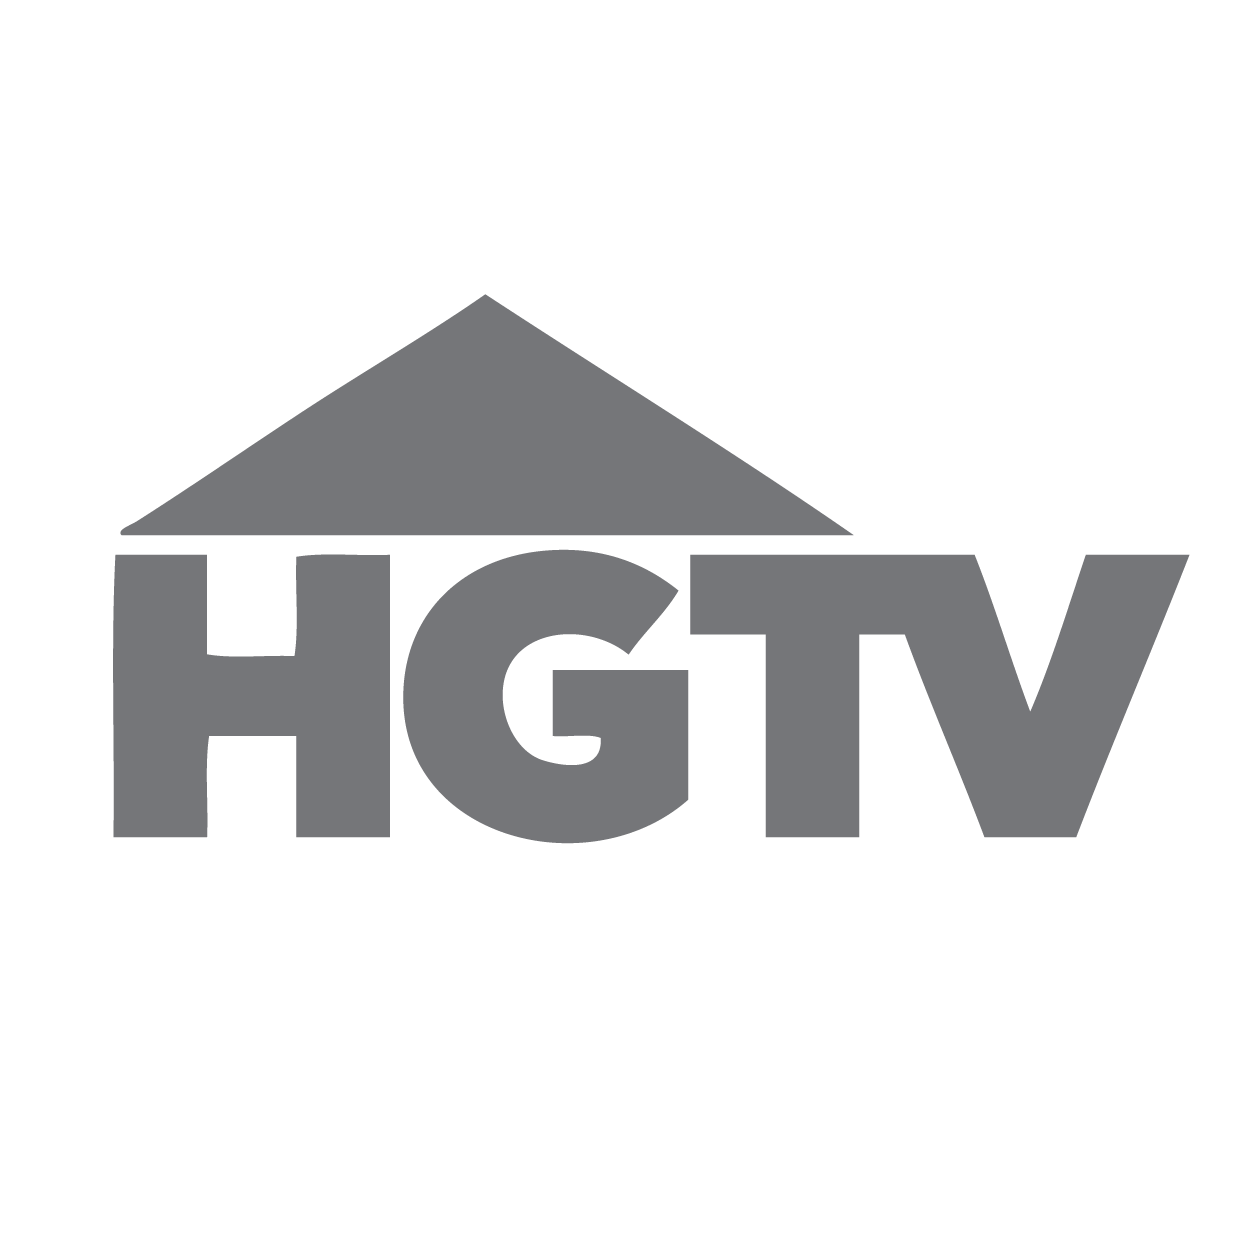 HGTV logo logo in grey